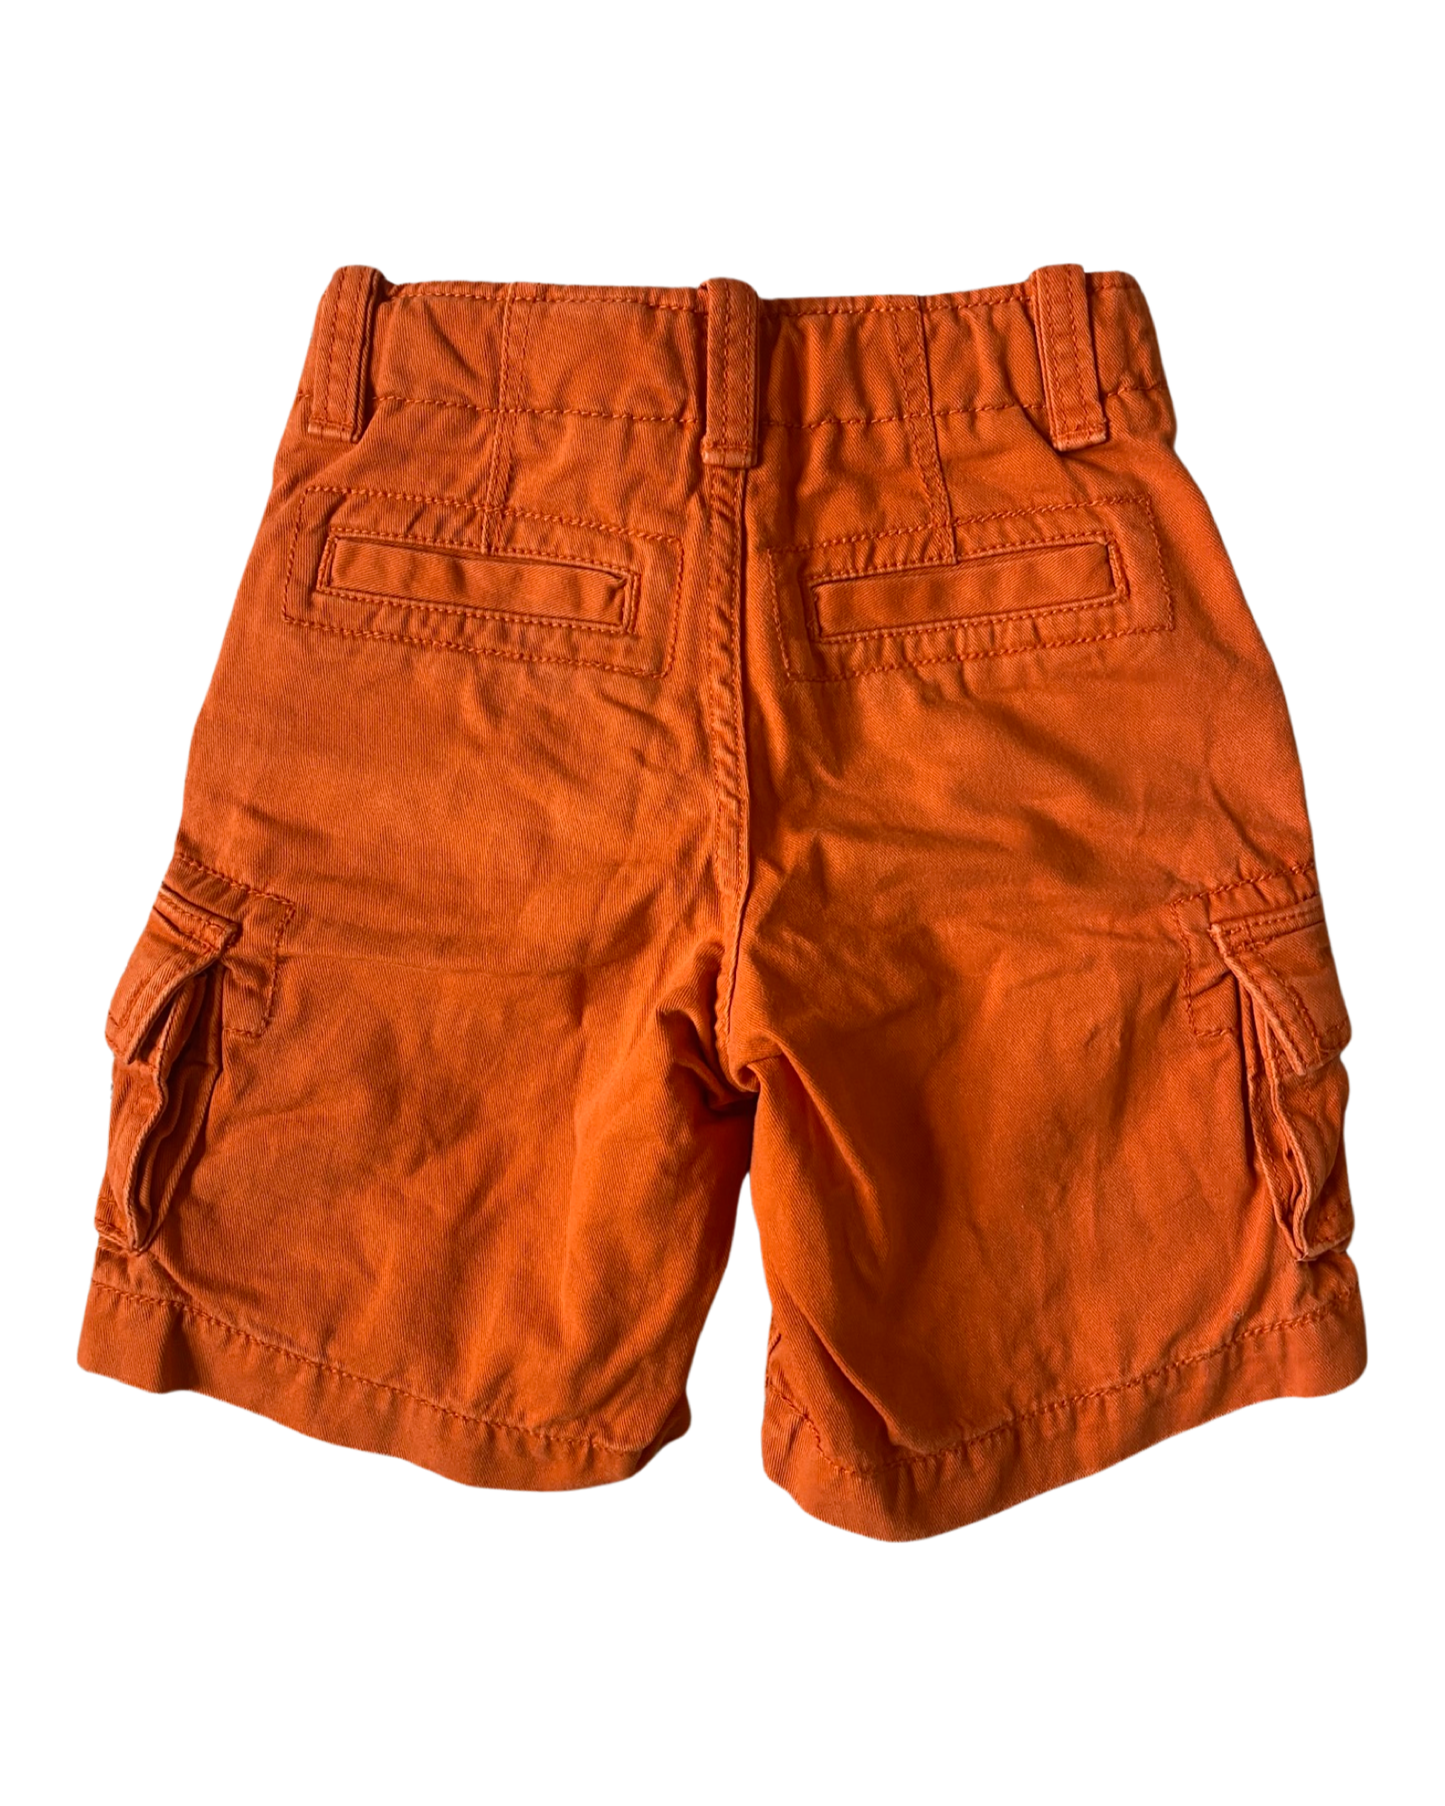 Gap Kids burnt orange cargo shorts (size 3-4yrs)